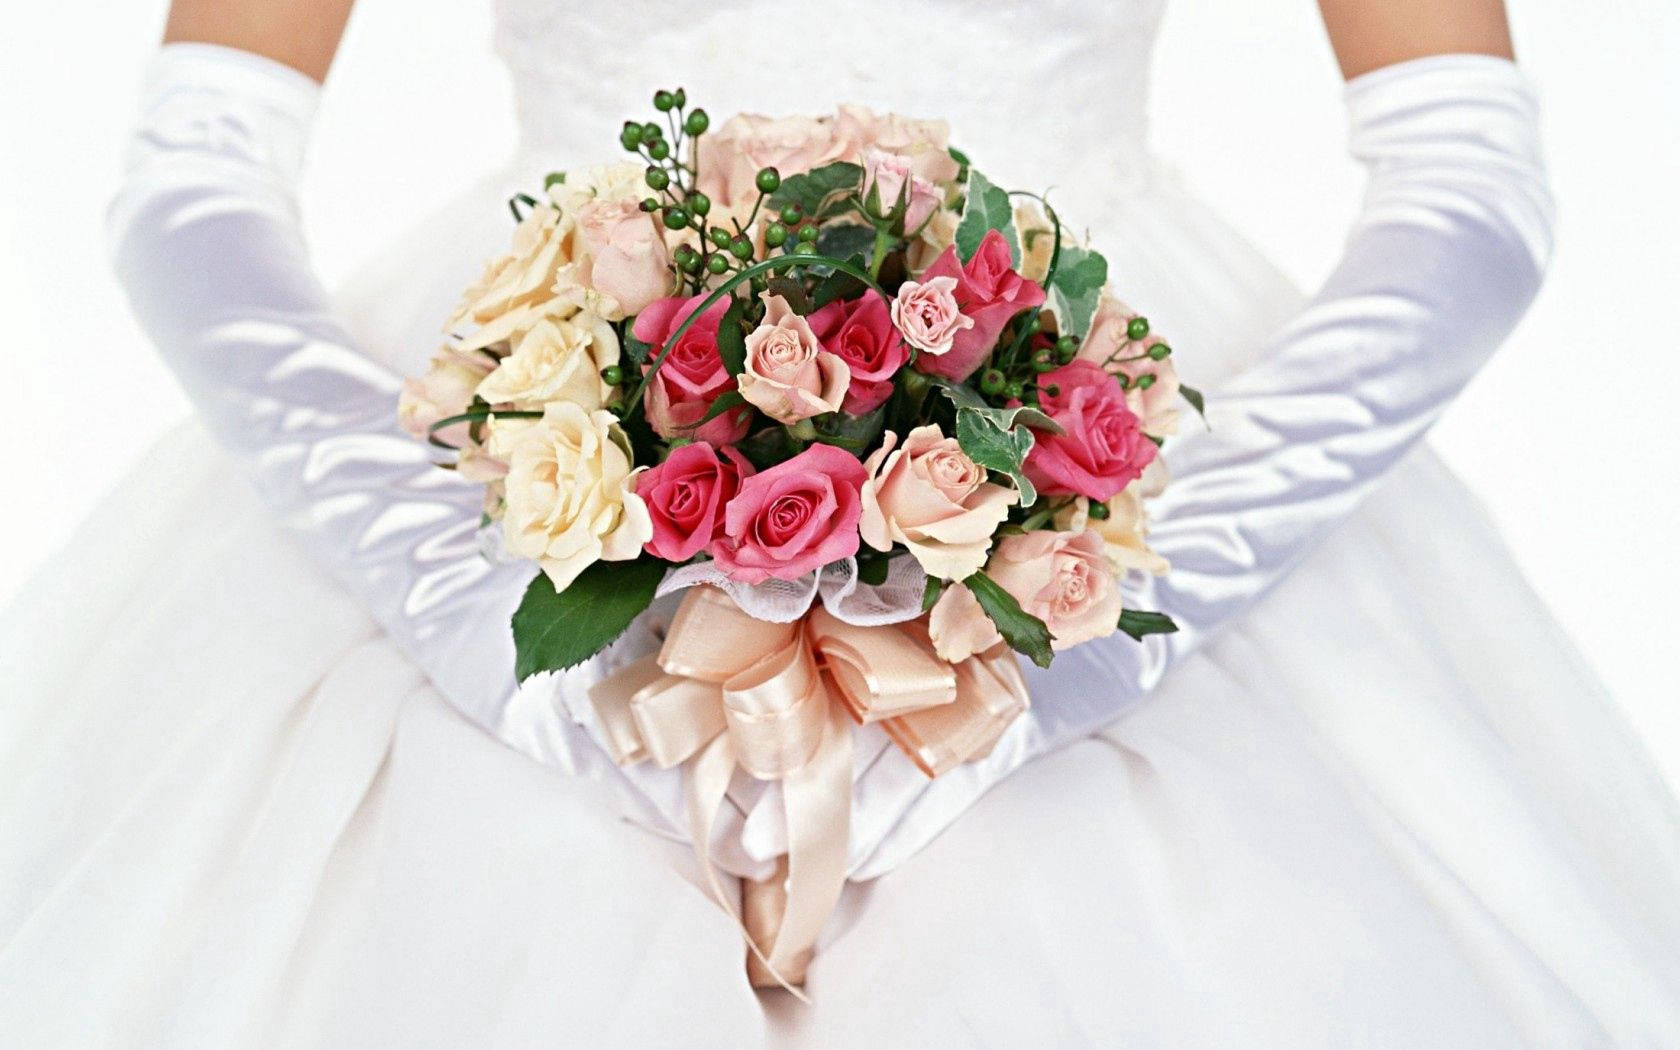 Bride With Bouquet